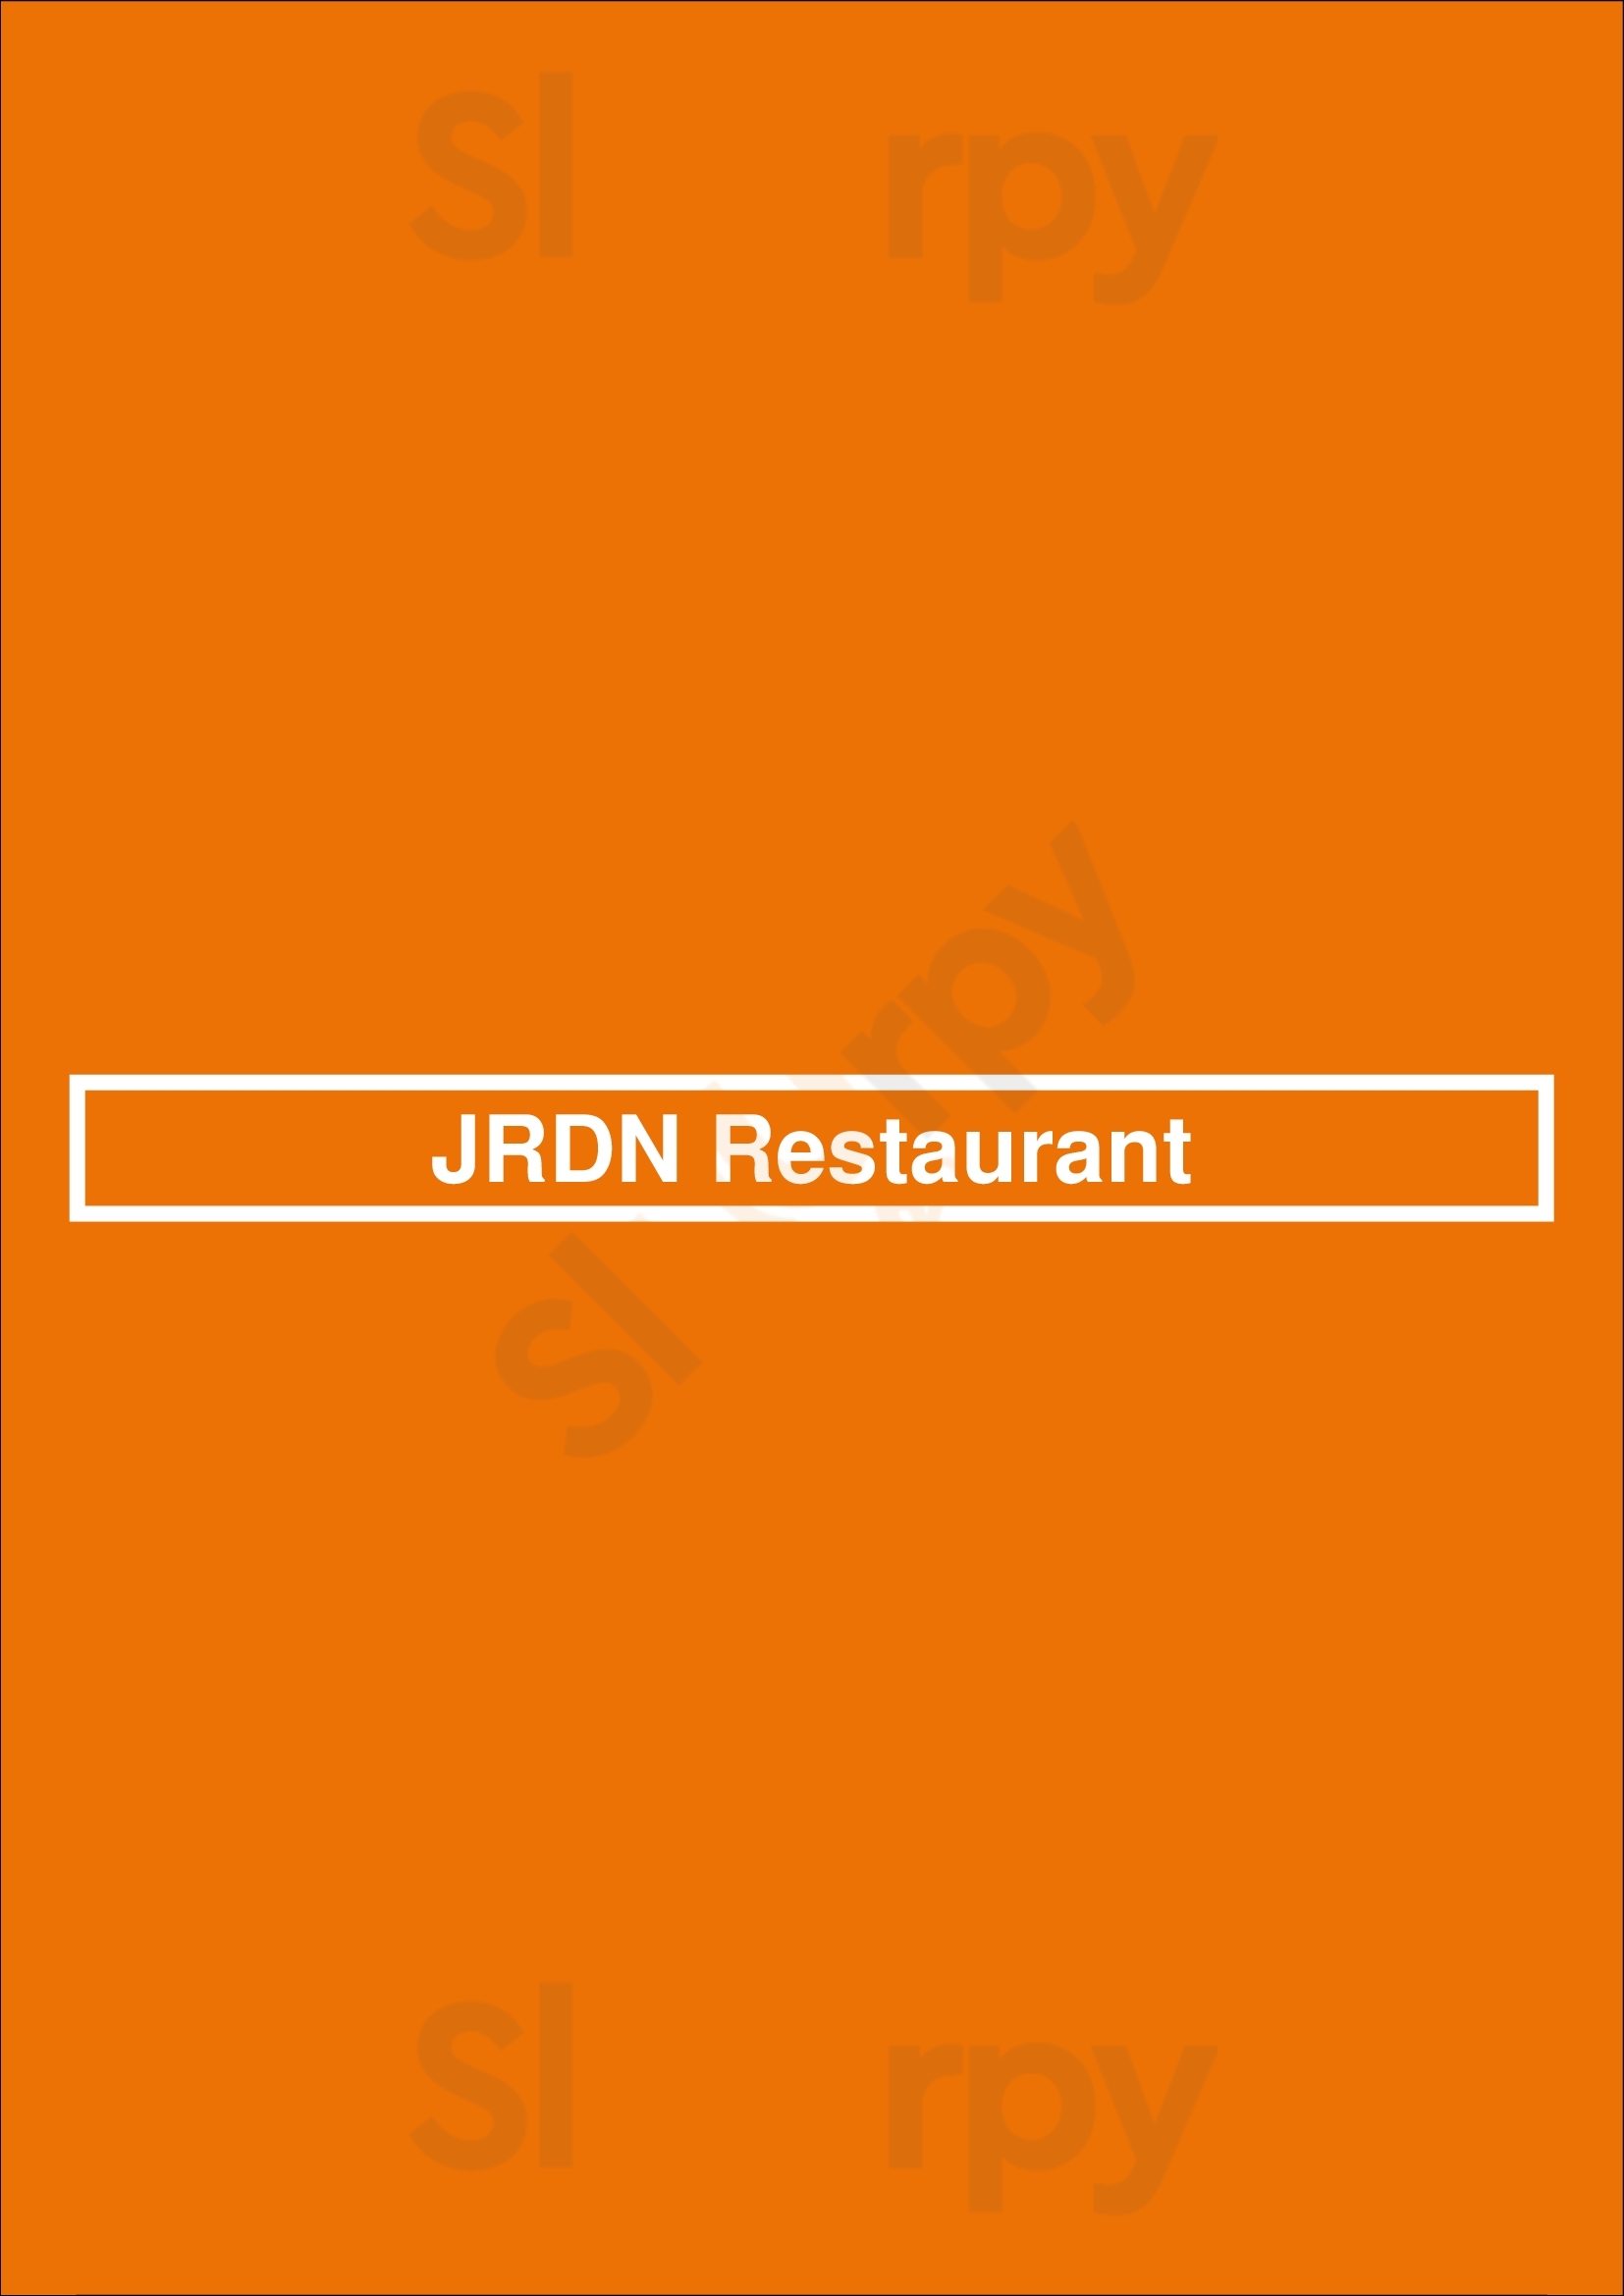 Jrdn Restaurant San Diego Menu - 1